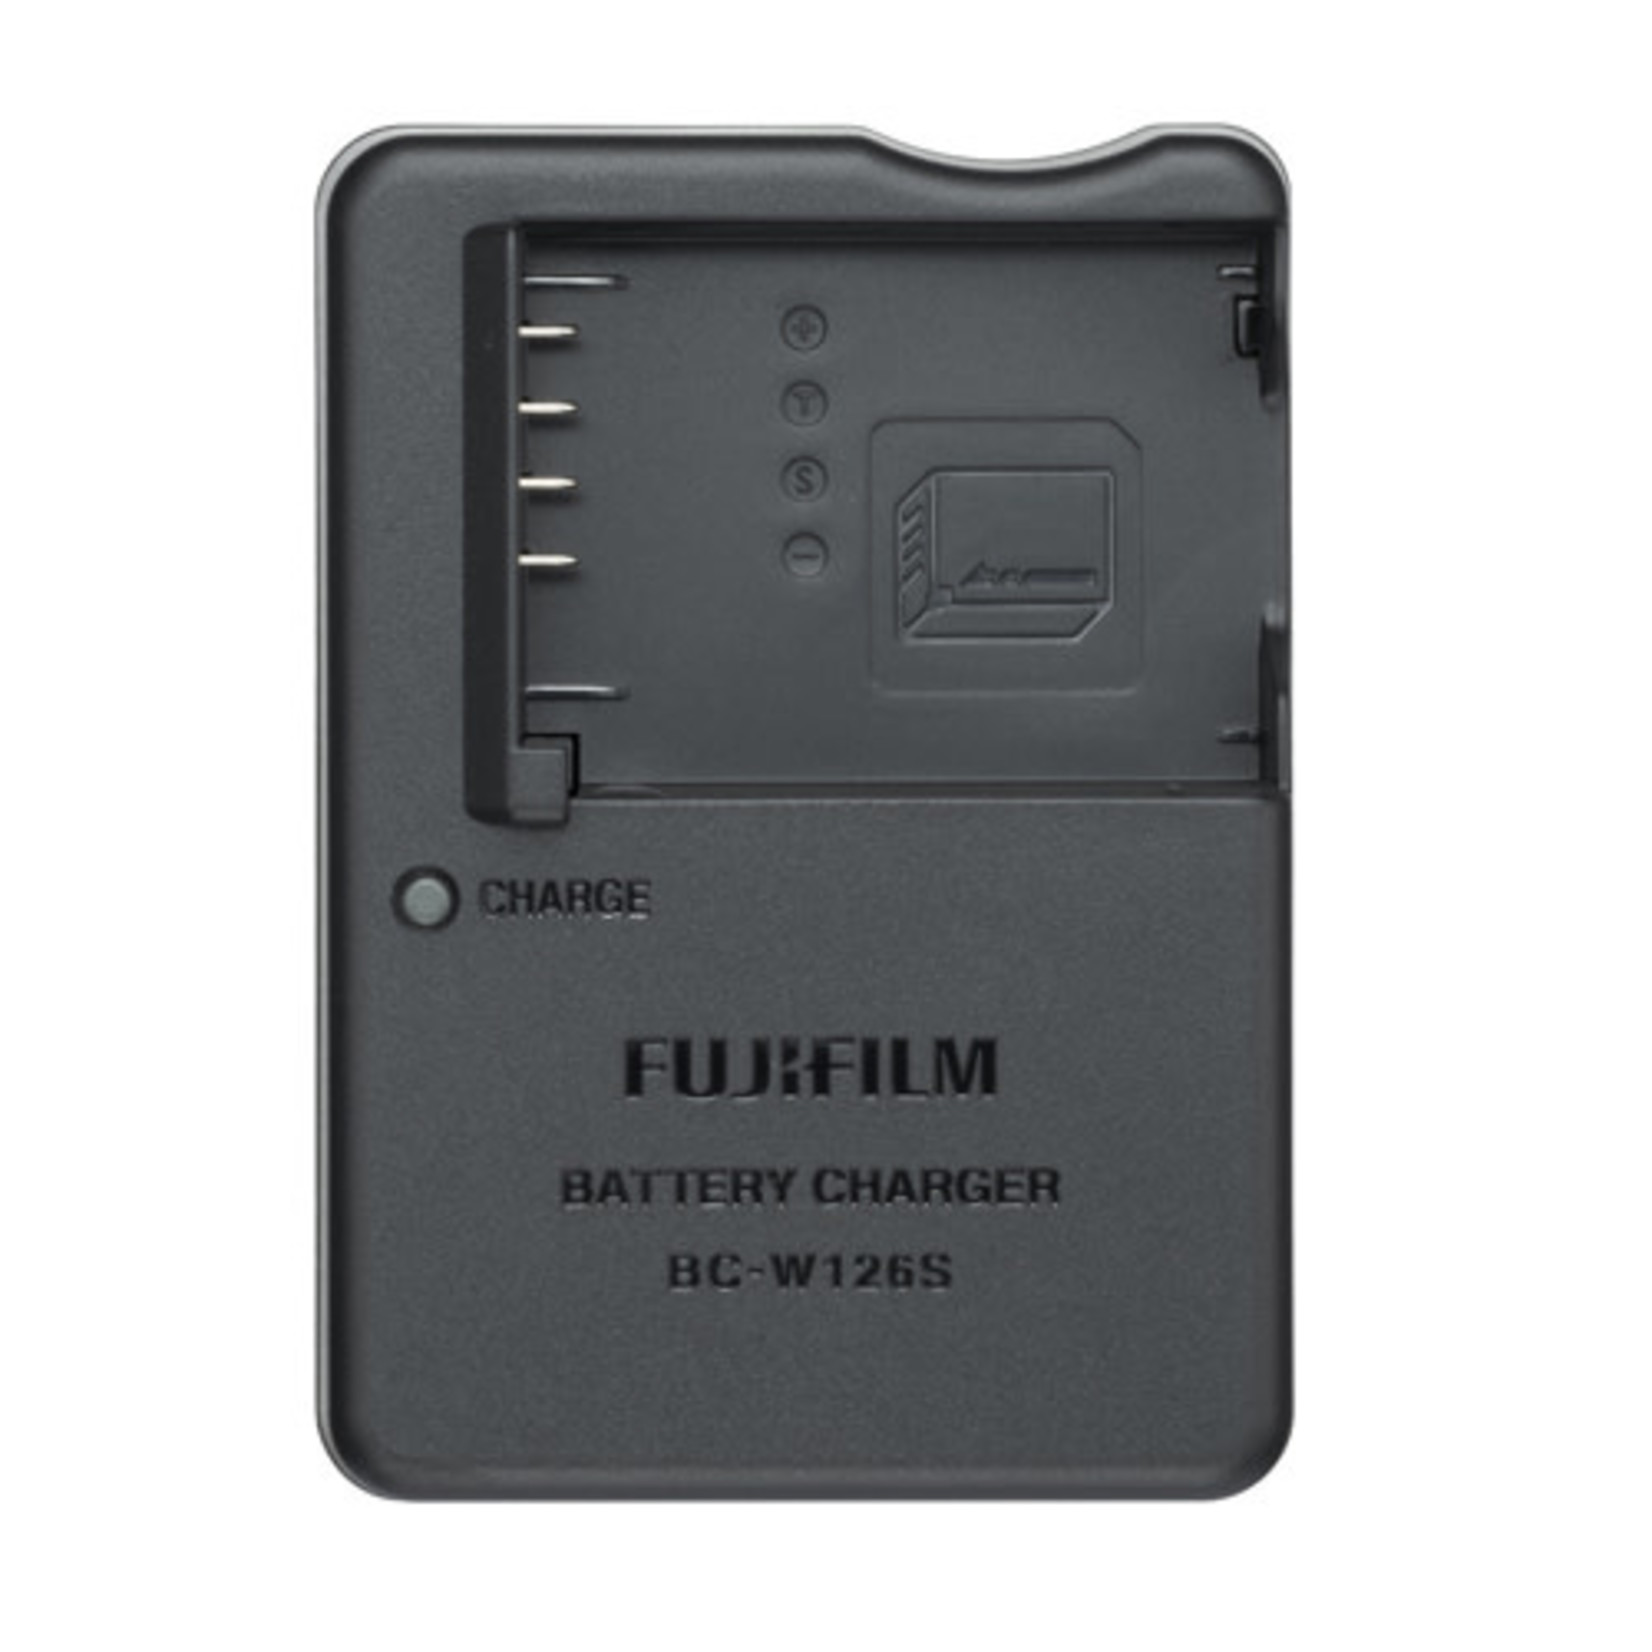 FujiFilm FujiFilm Battery Charger BC-W126S